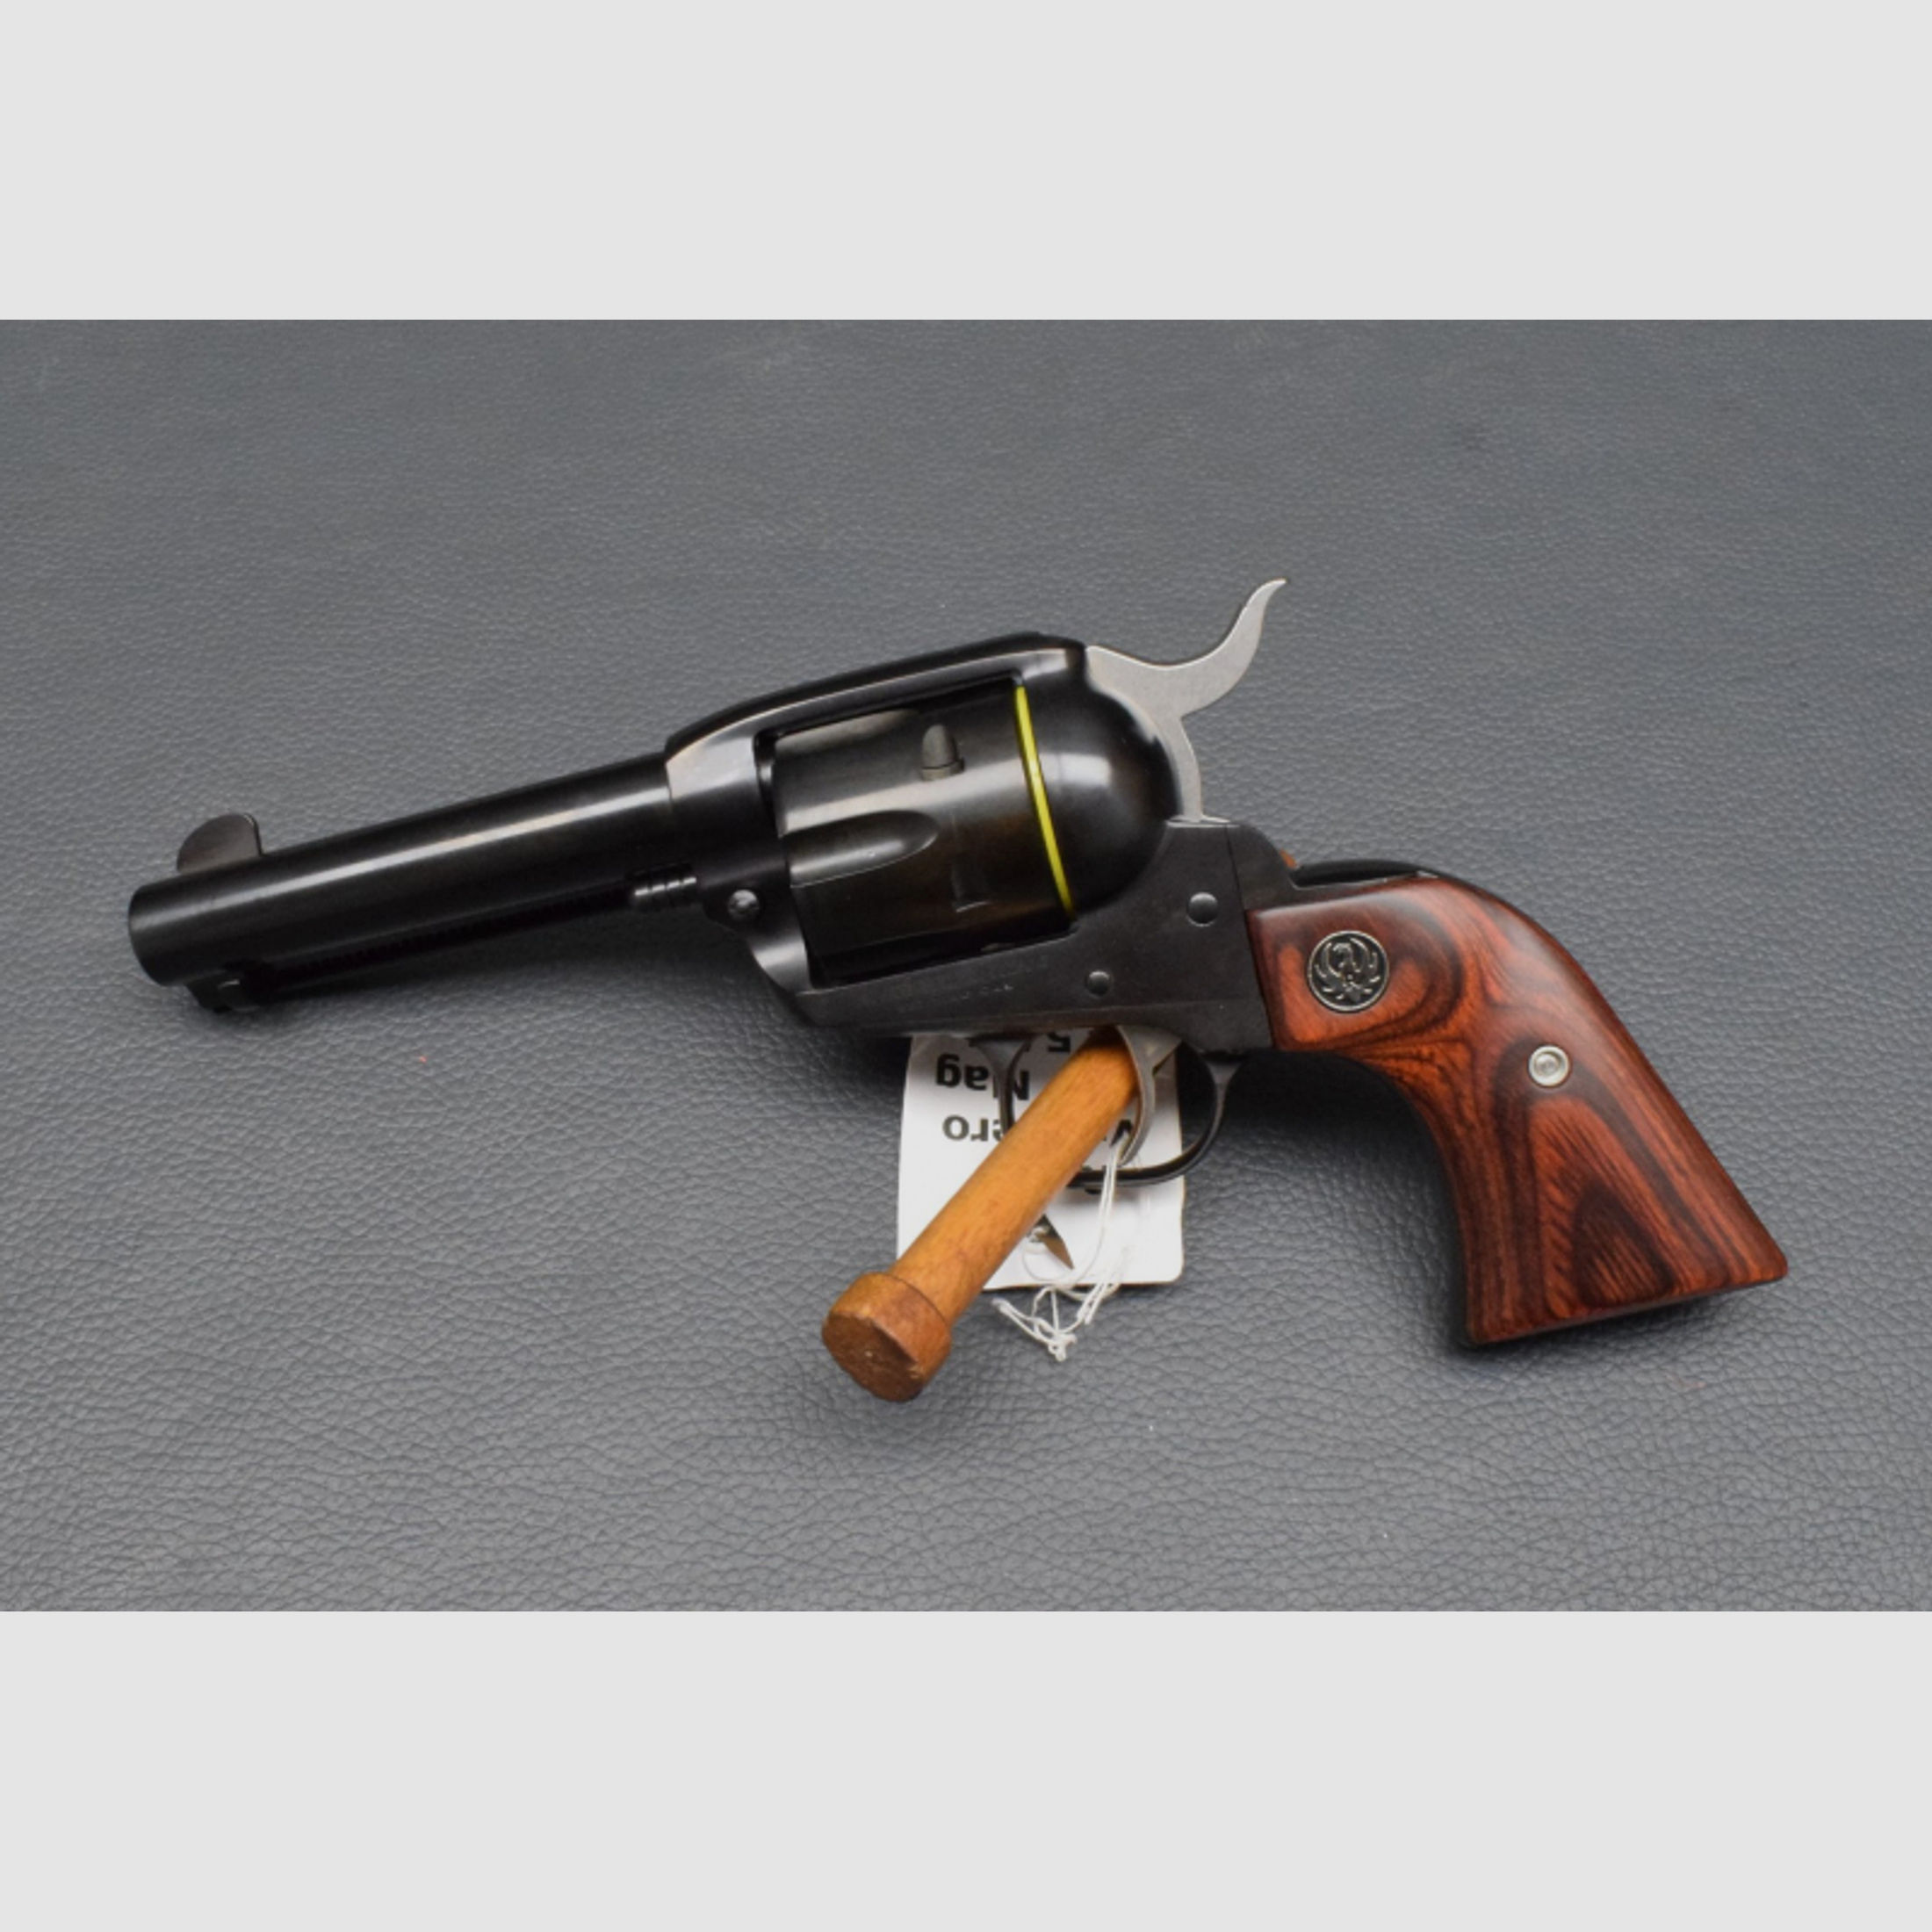 Ruger Modell New Vaquero NV-34, 357 Magnum,4 5/8" Lauf, brüniert, Holzgriff, Neuware